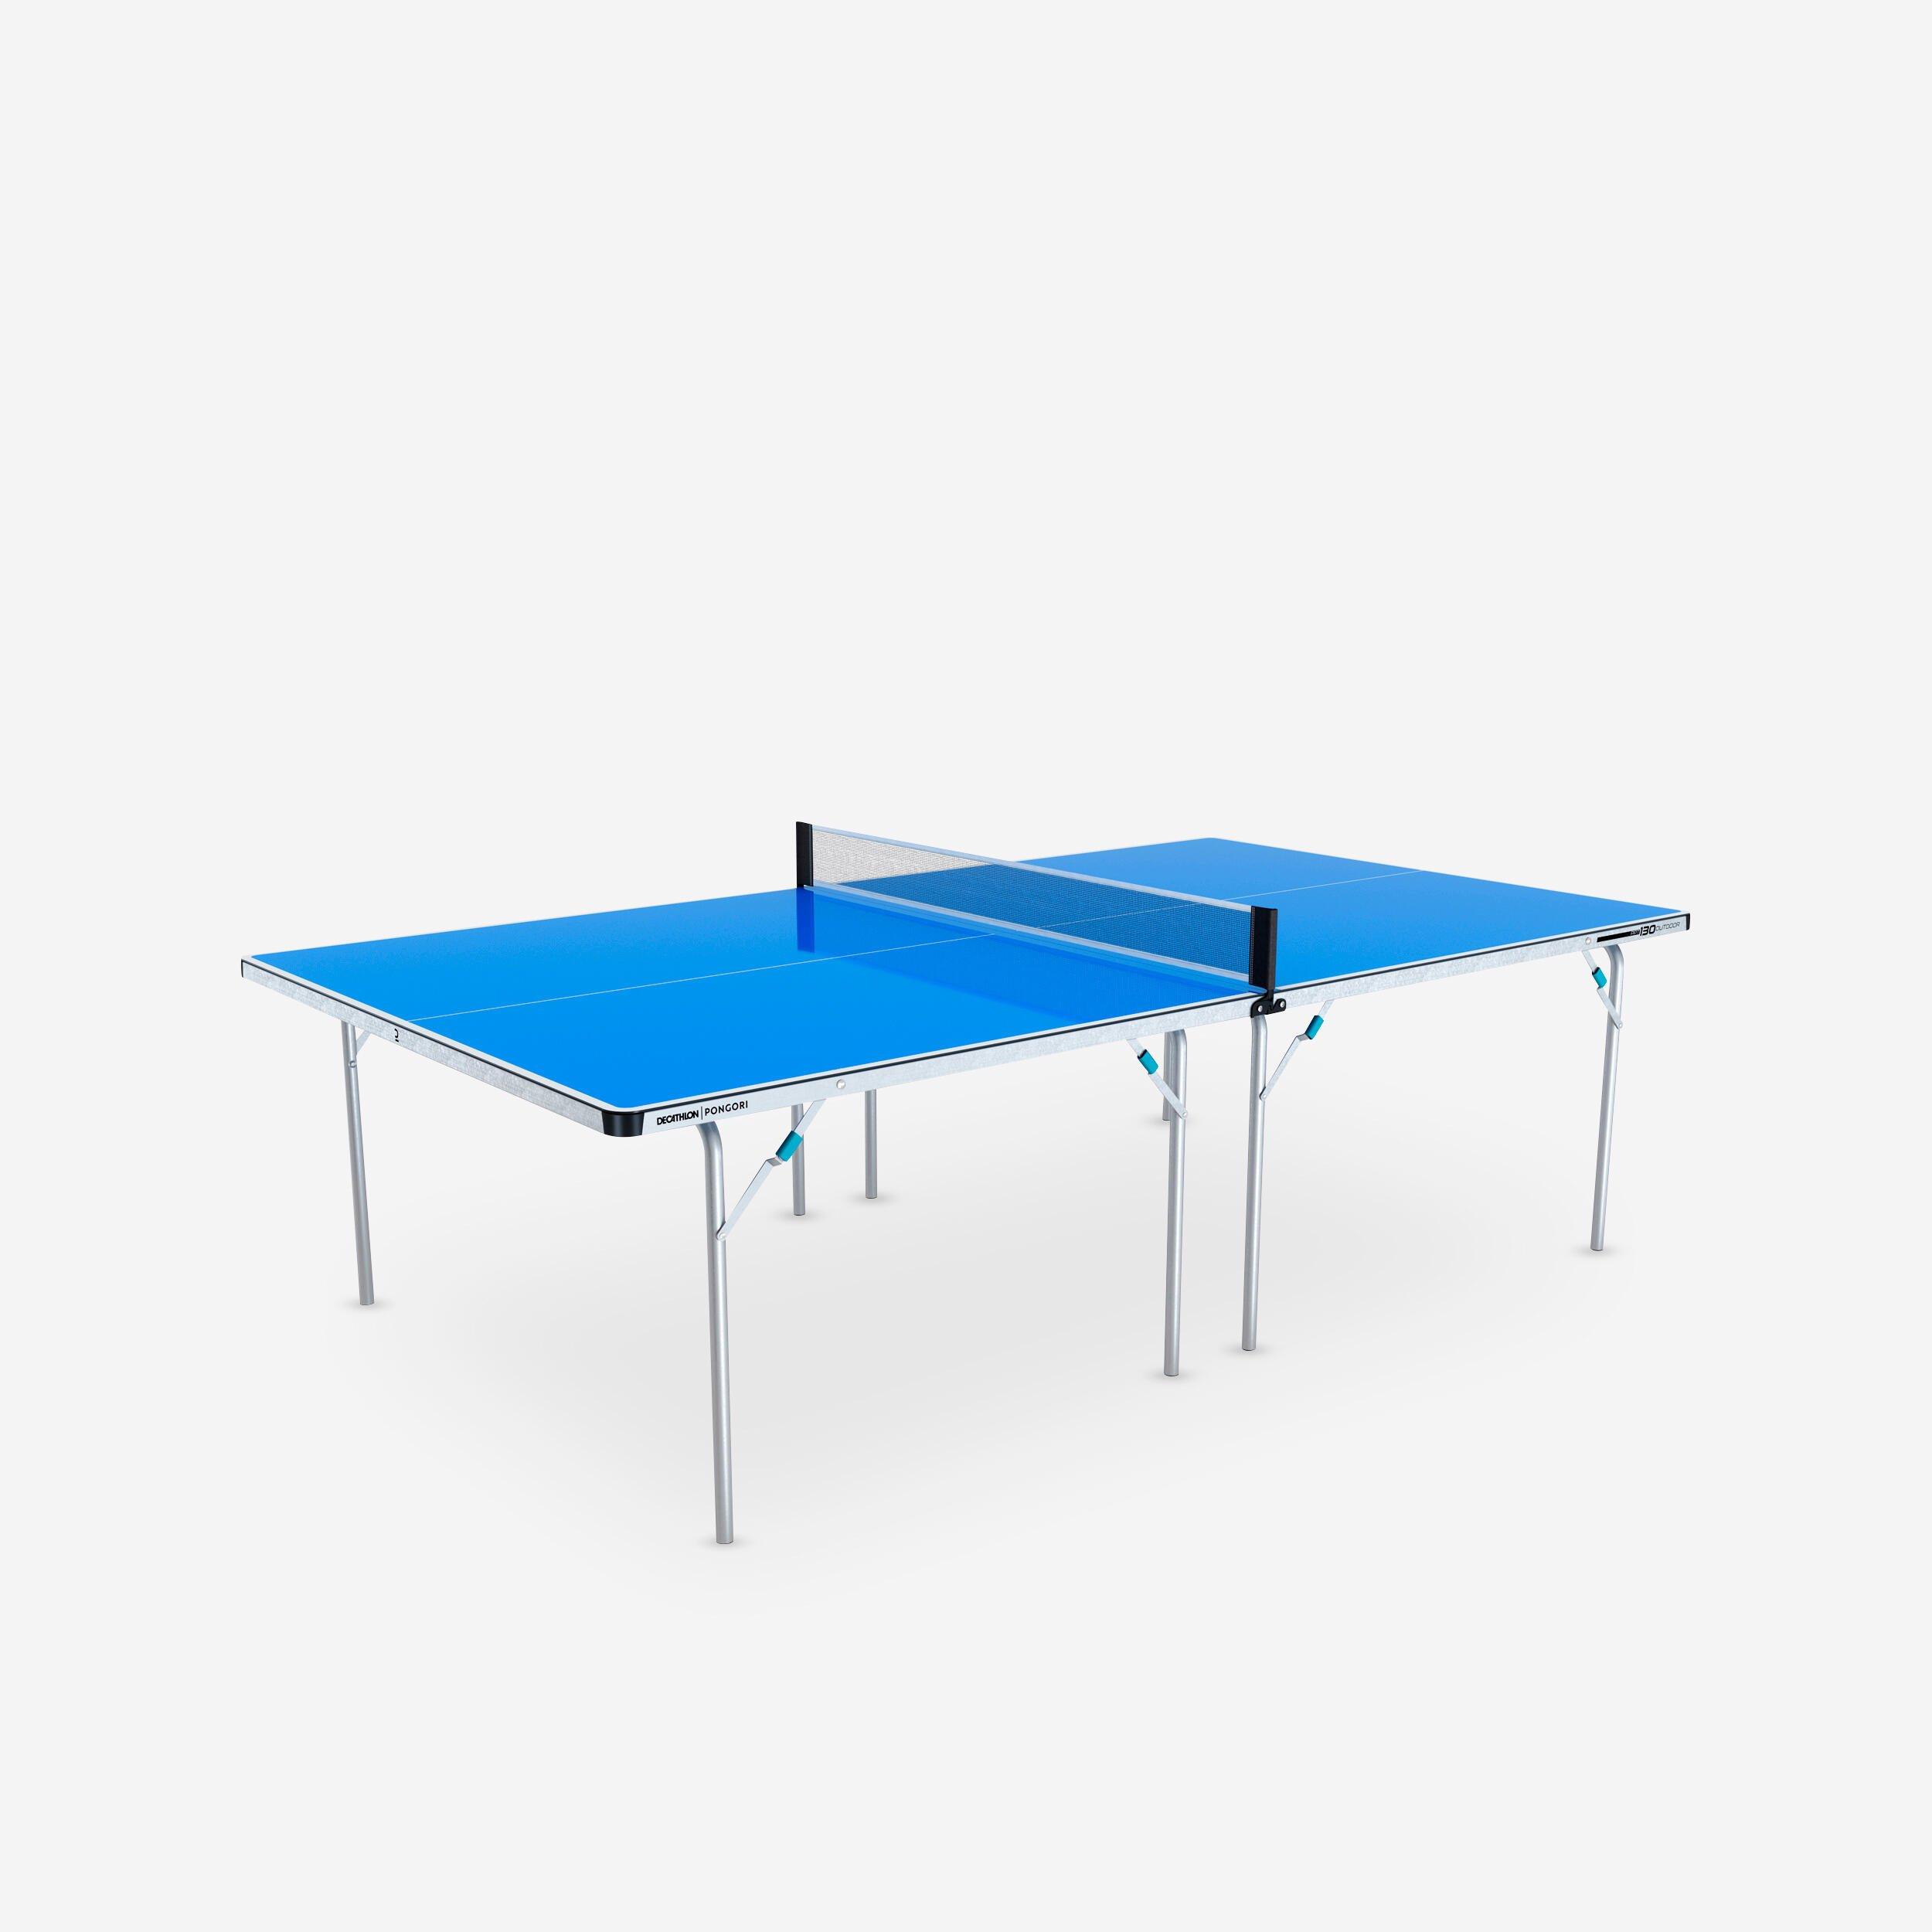 Decathlon Outdoor Table Tennis Table Ppt 130